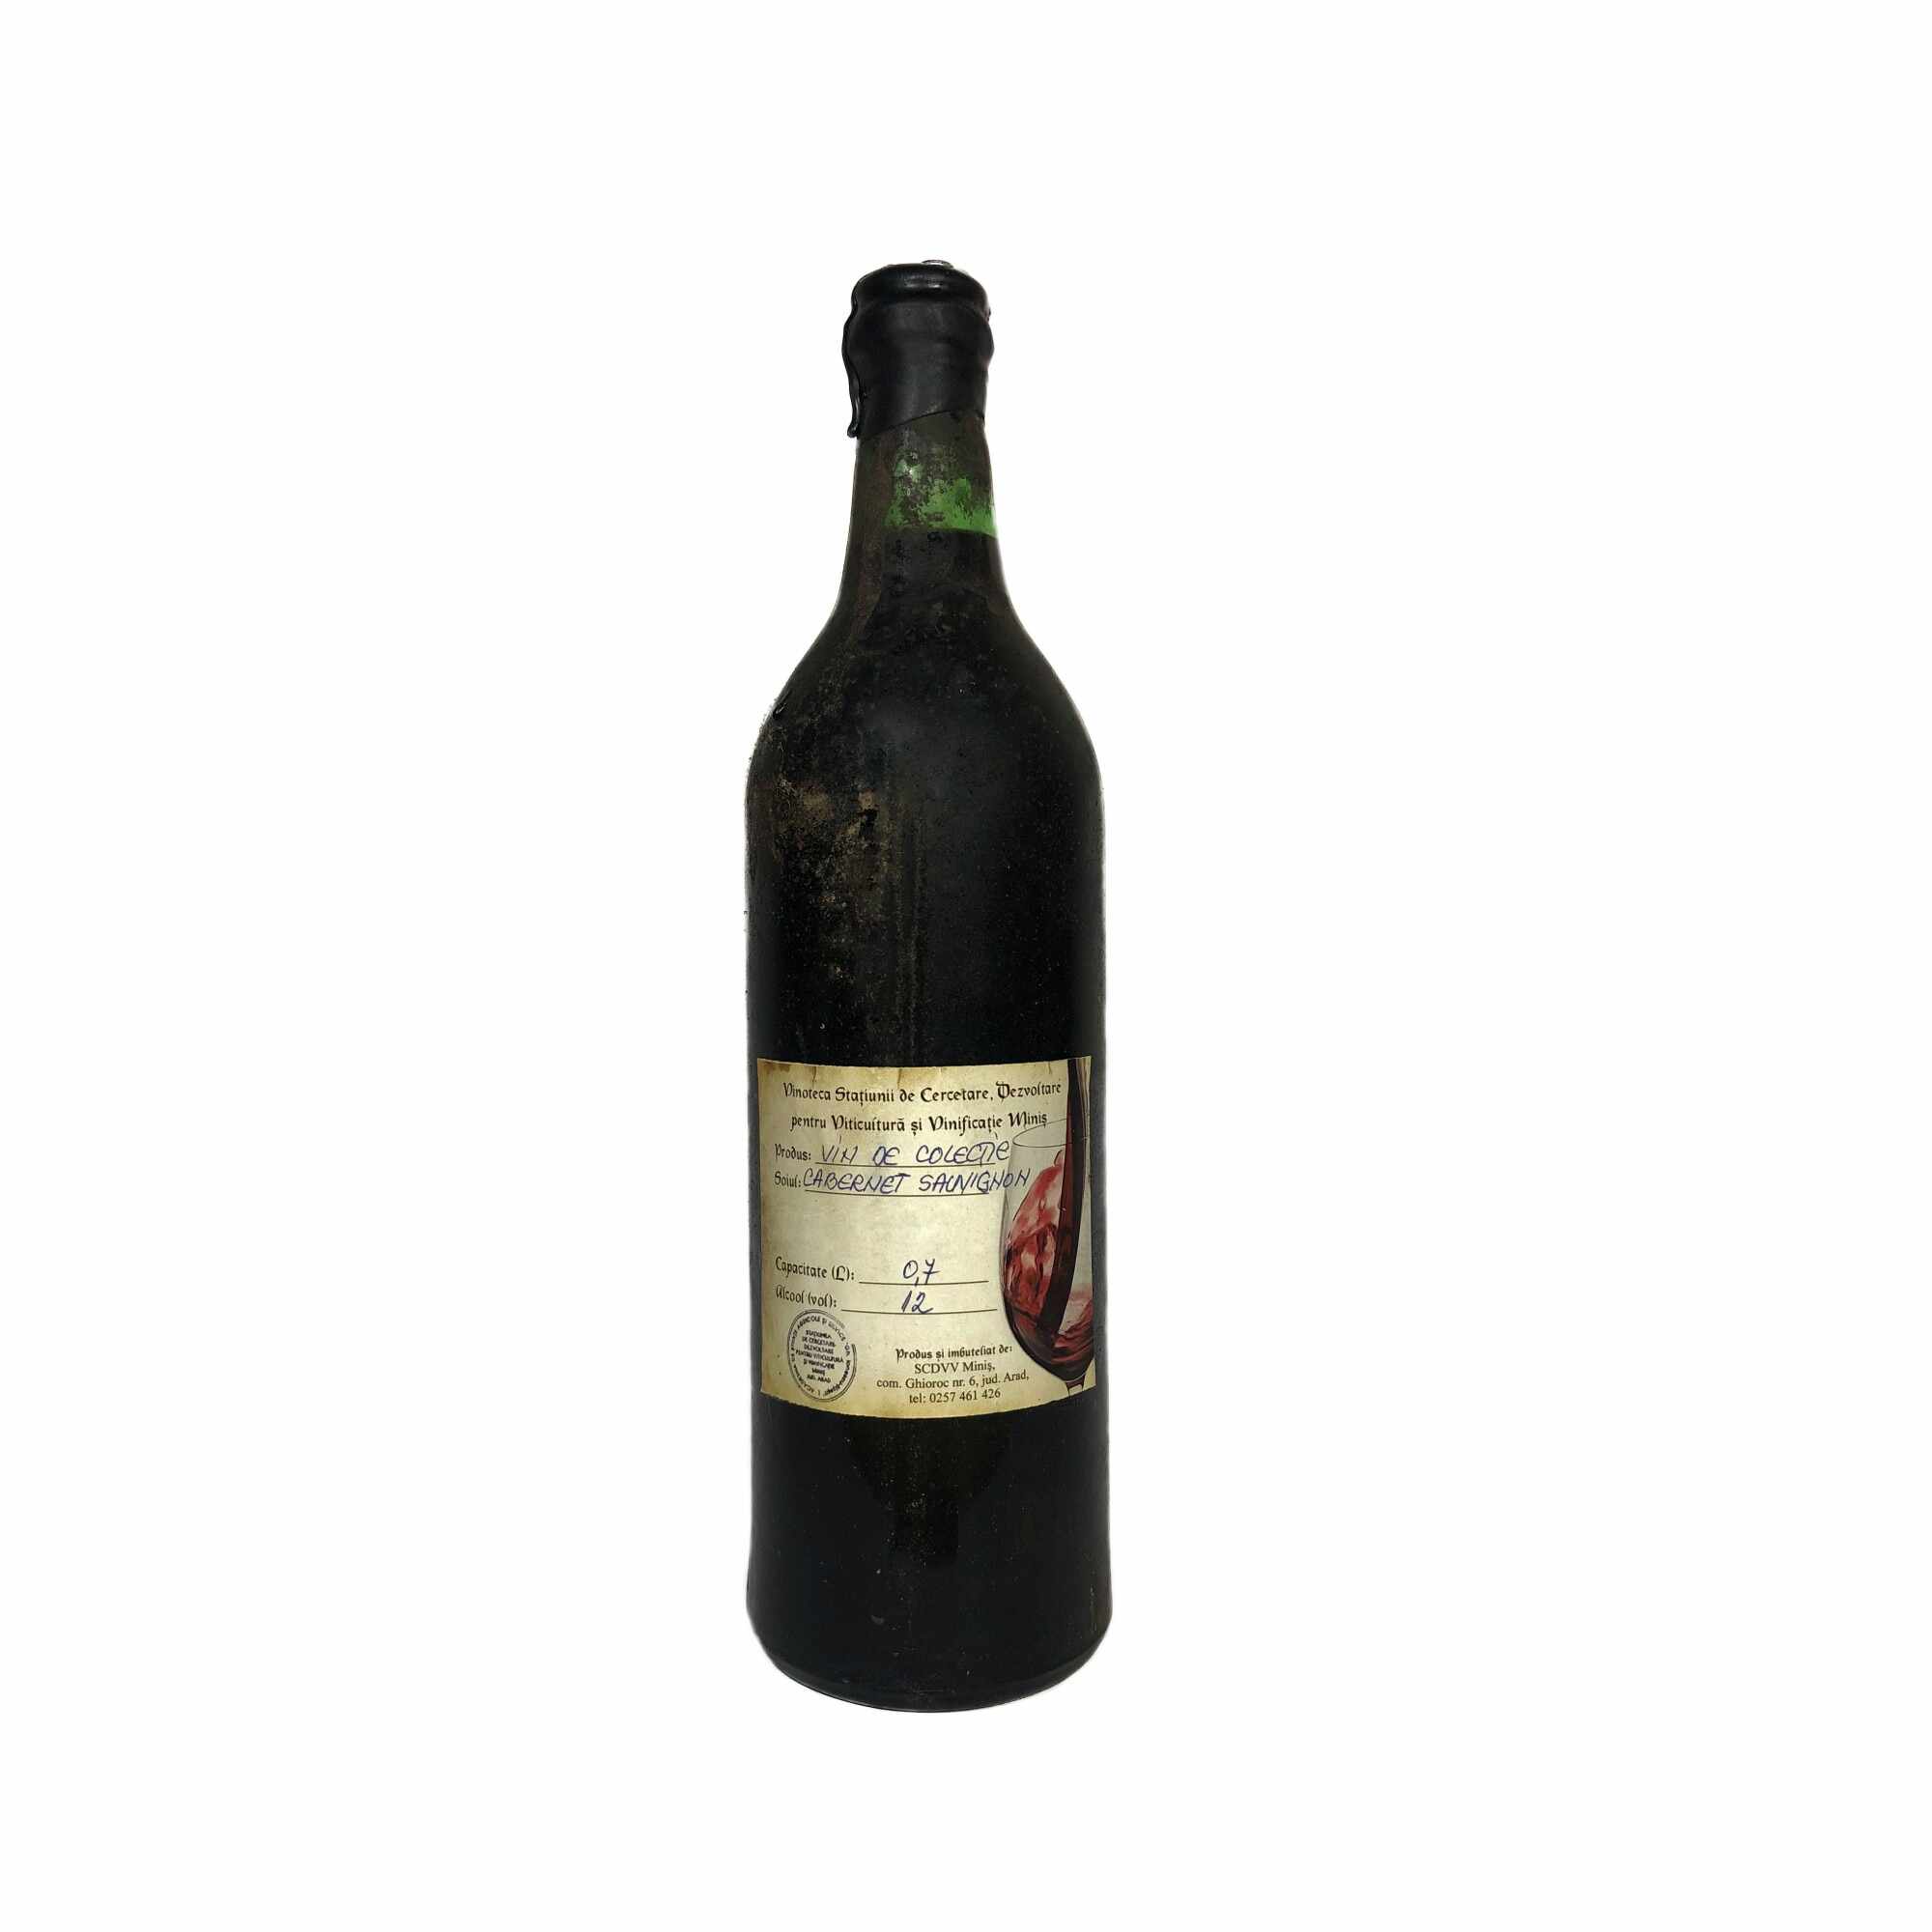 Vin rosu de colectie Cabernet Sauvignon - Anul 1967 in cutie de lemn, 700 ml